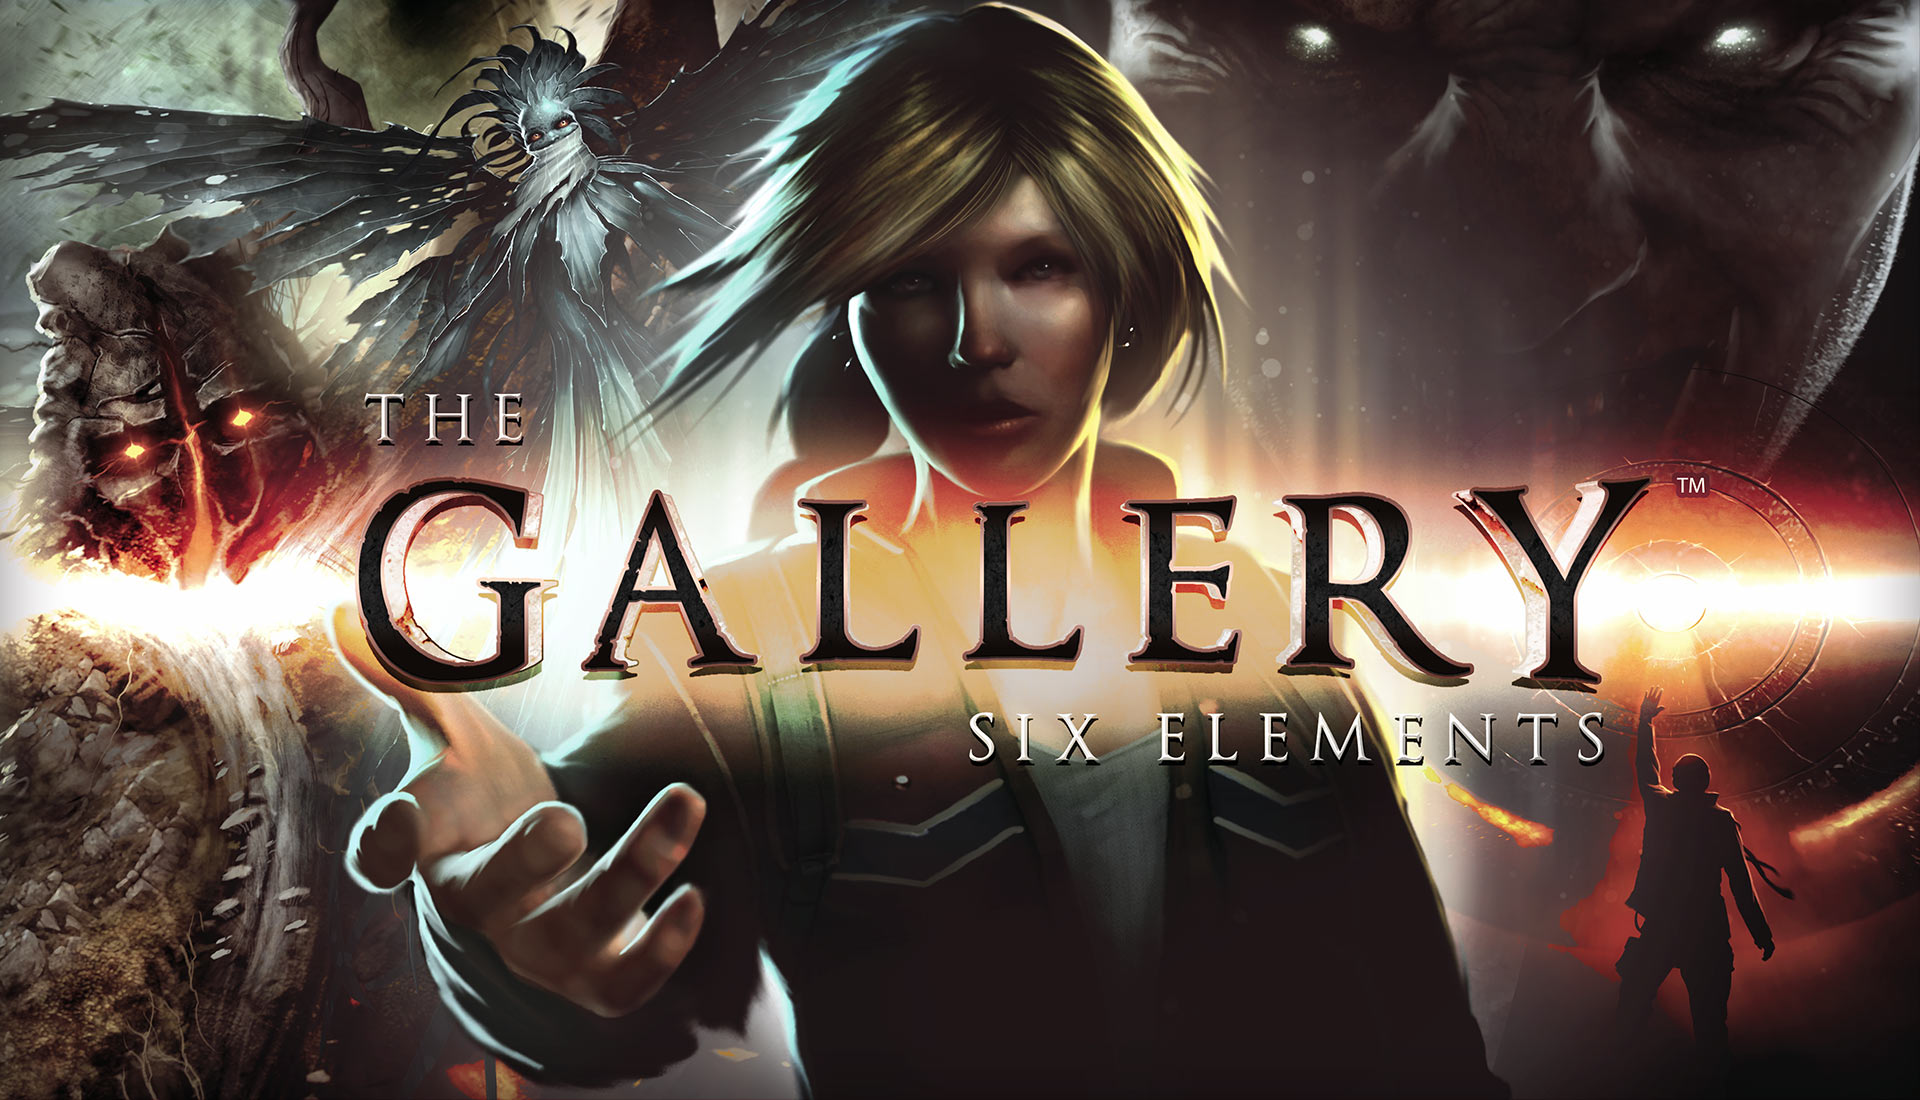 The Gallery Six Elements 14 | Virtual Reality | ไปดูความคืบหน้าโปรเจคVive ปล่อยคลิปGameplayออกมาให้ดูแล้ว